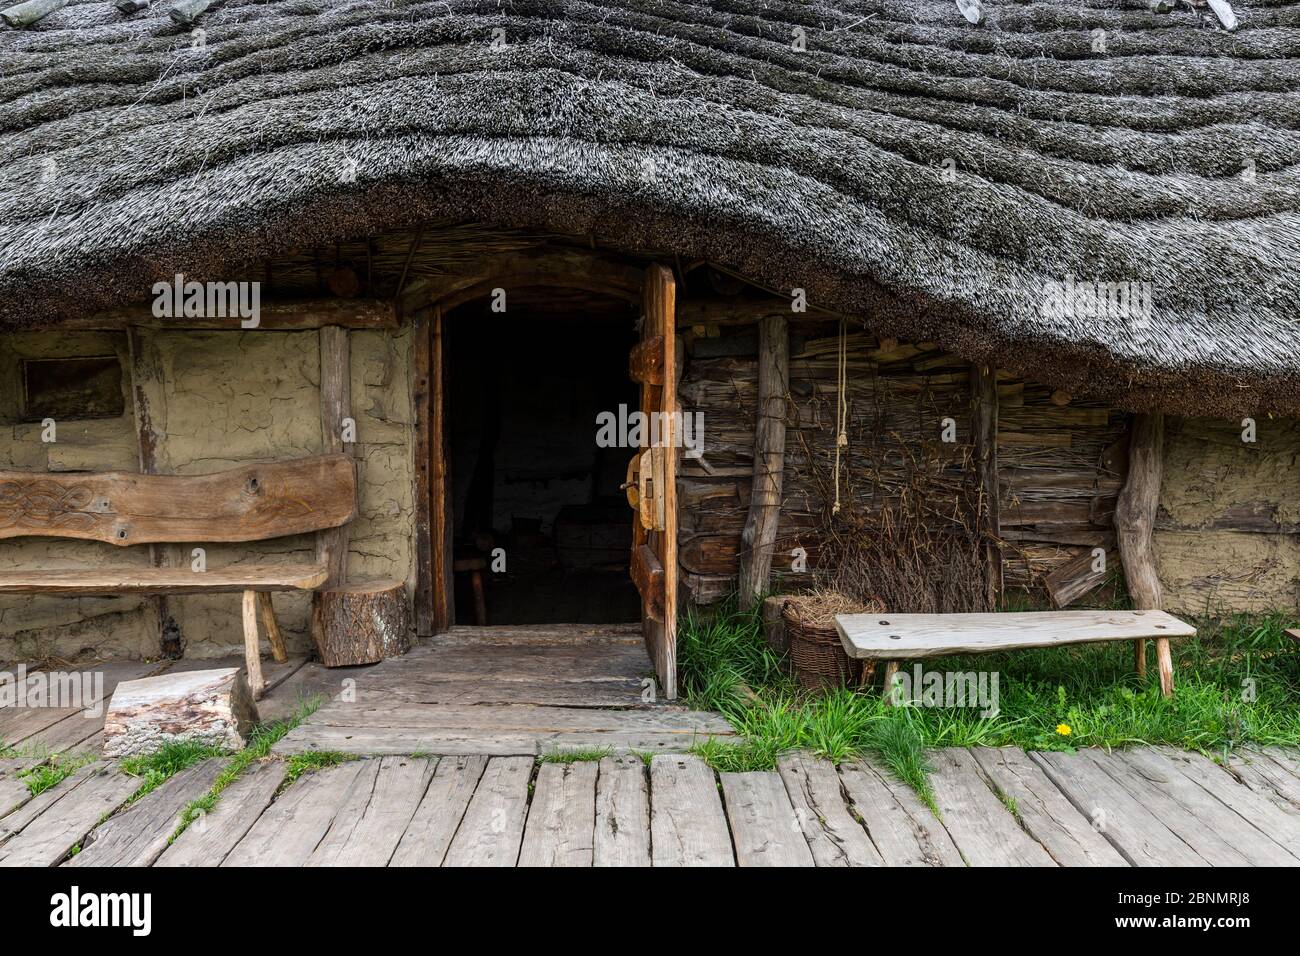 Europe, Poland, West Pomeranian Voivodeship, Slavs and Vikings’ Center in Wolin Stock Photo